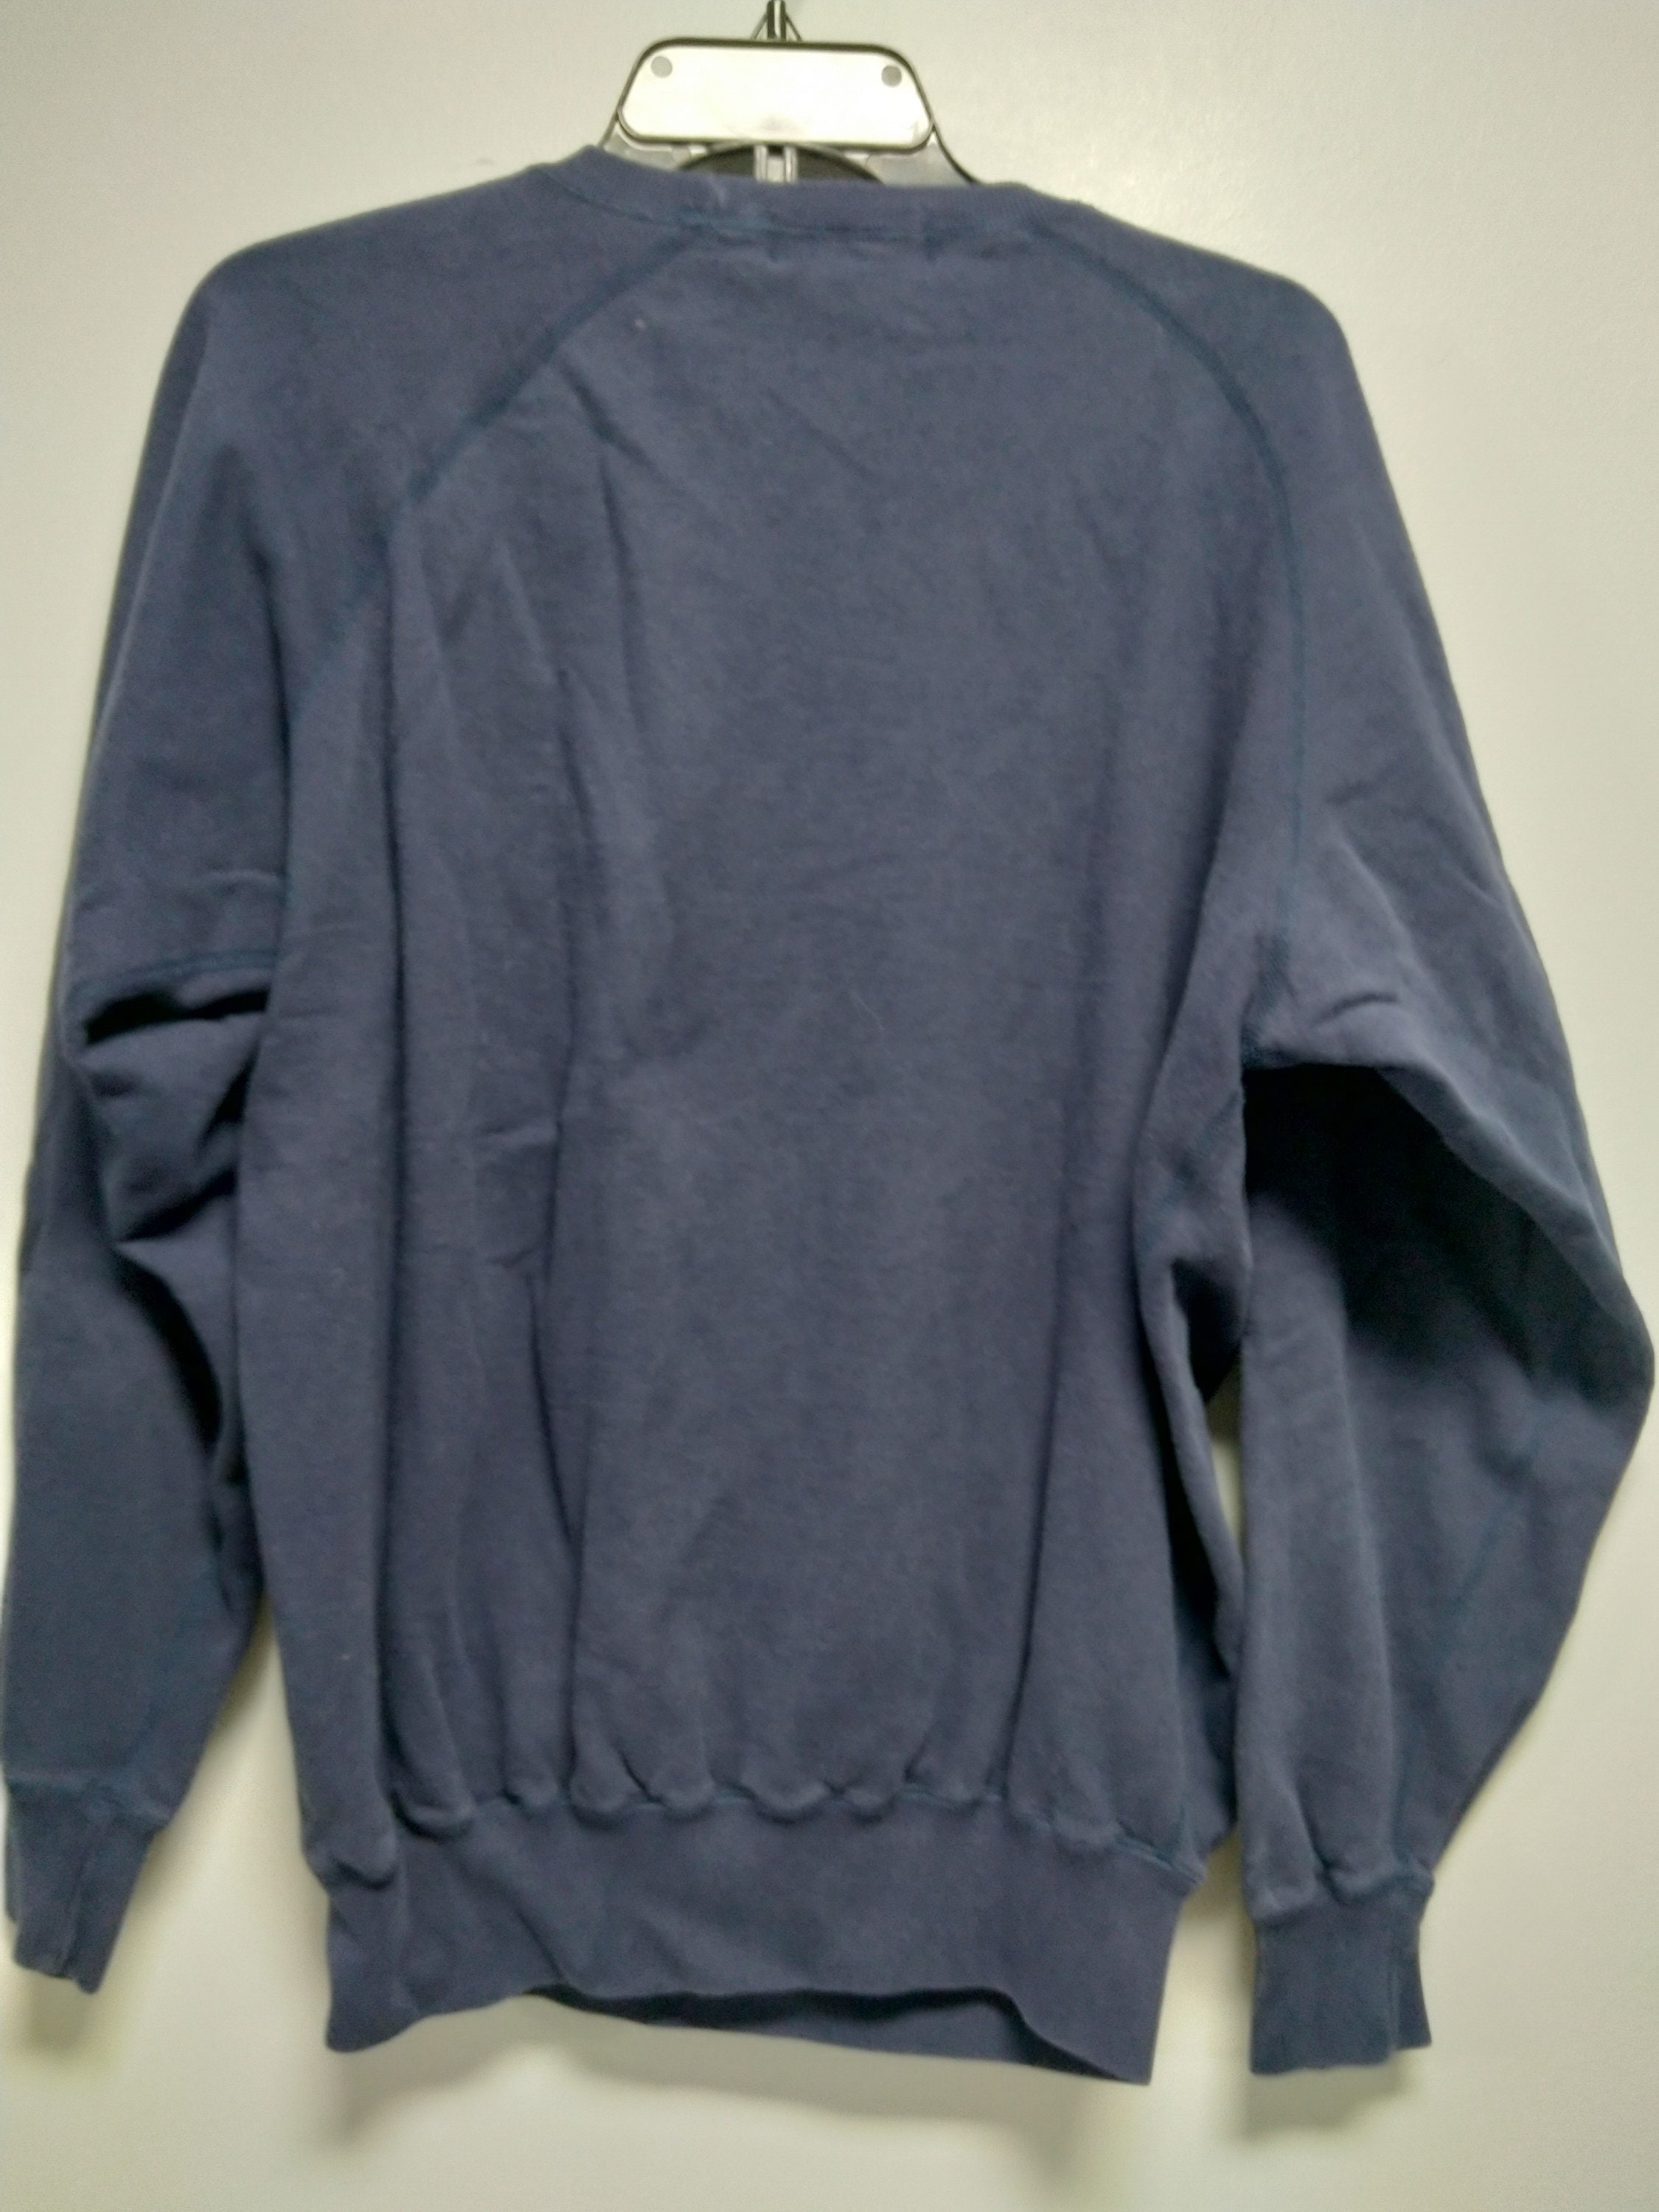 Very Nice Vintage Unisex Sweater // Sweatshrt by POLO RALPH LAUREN